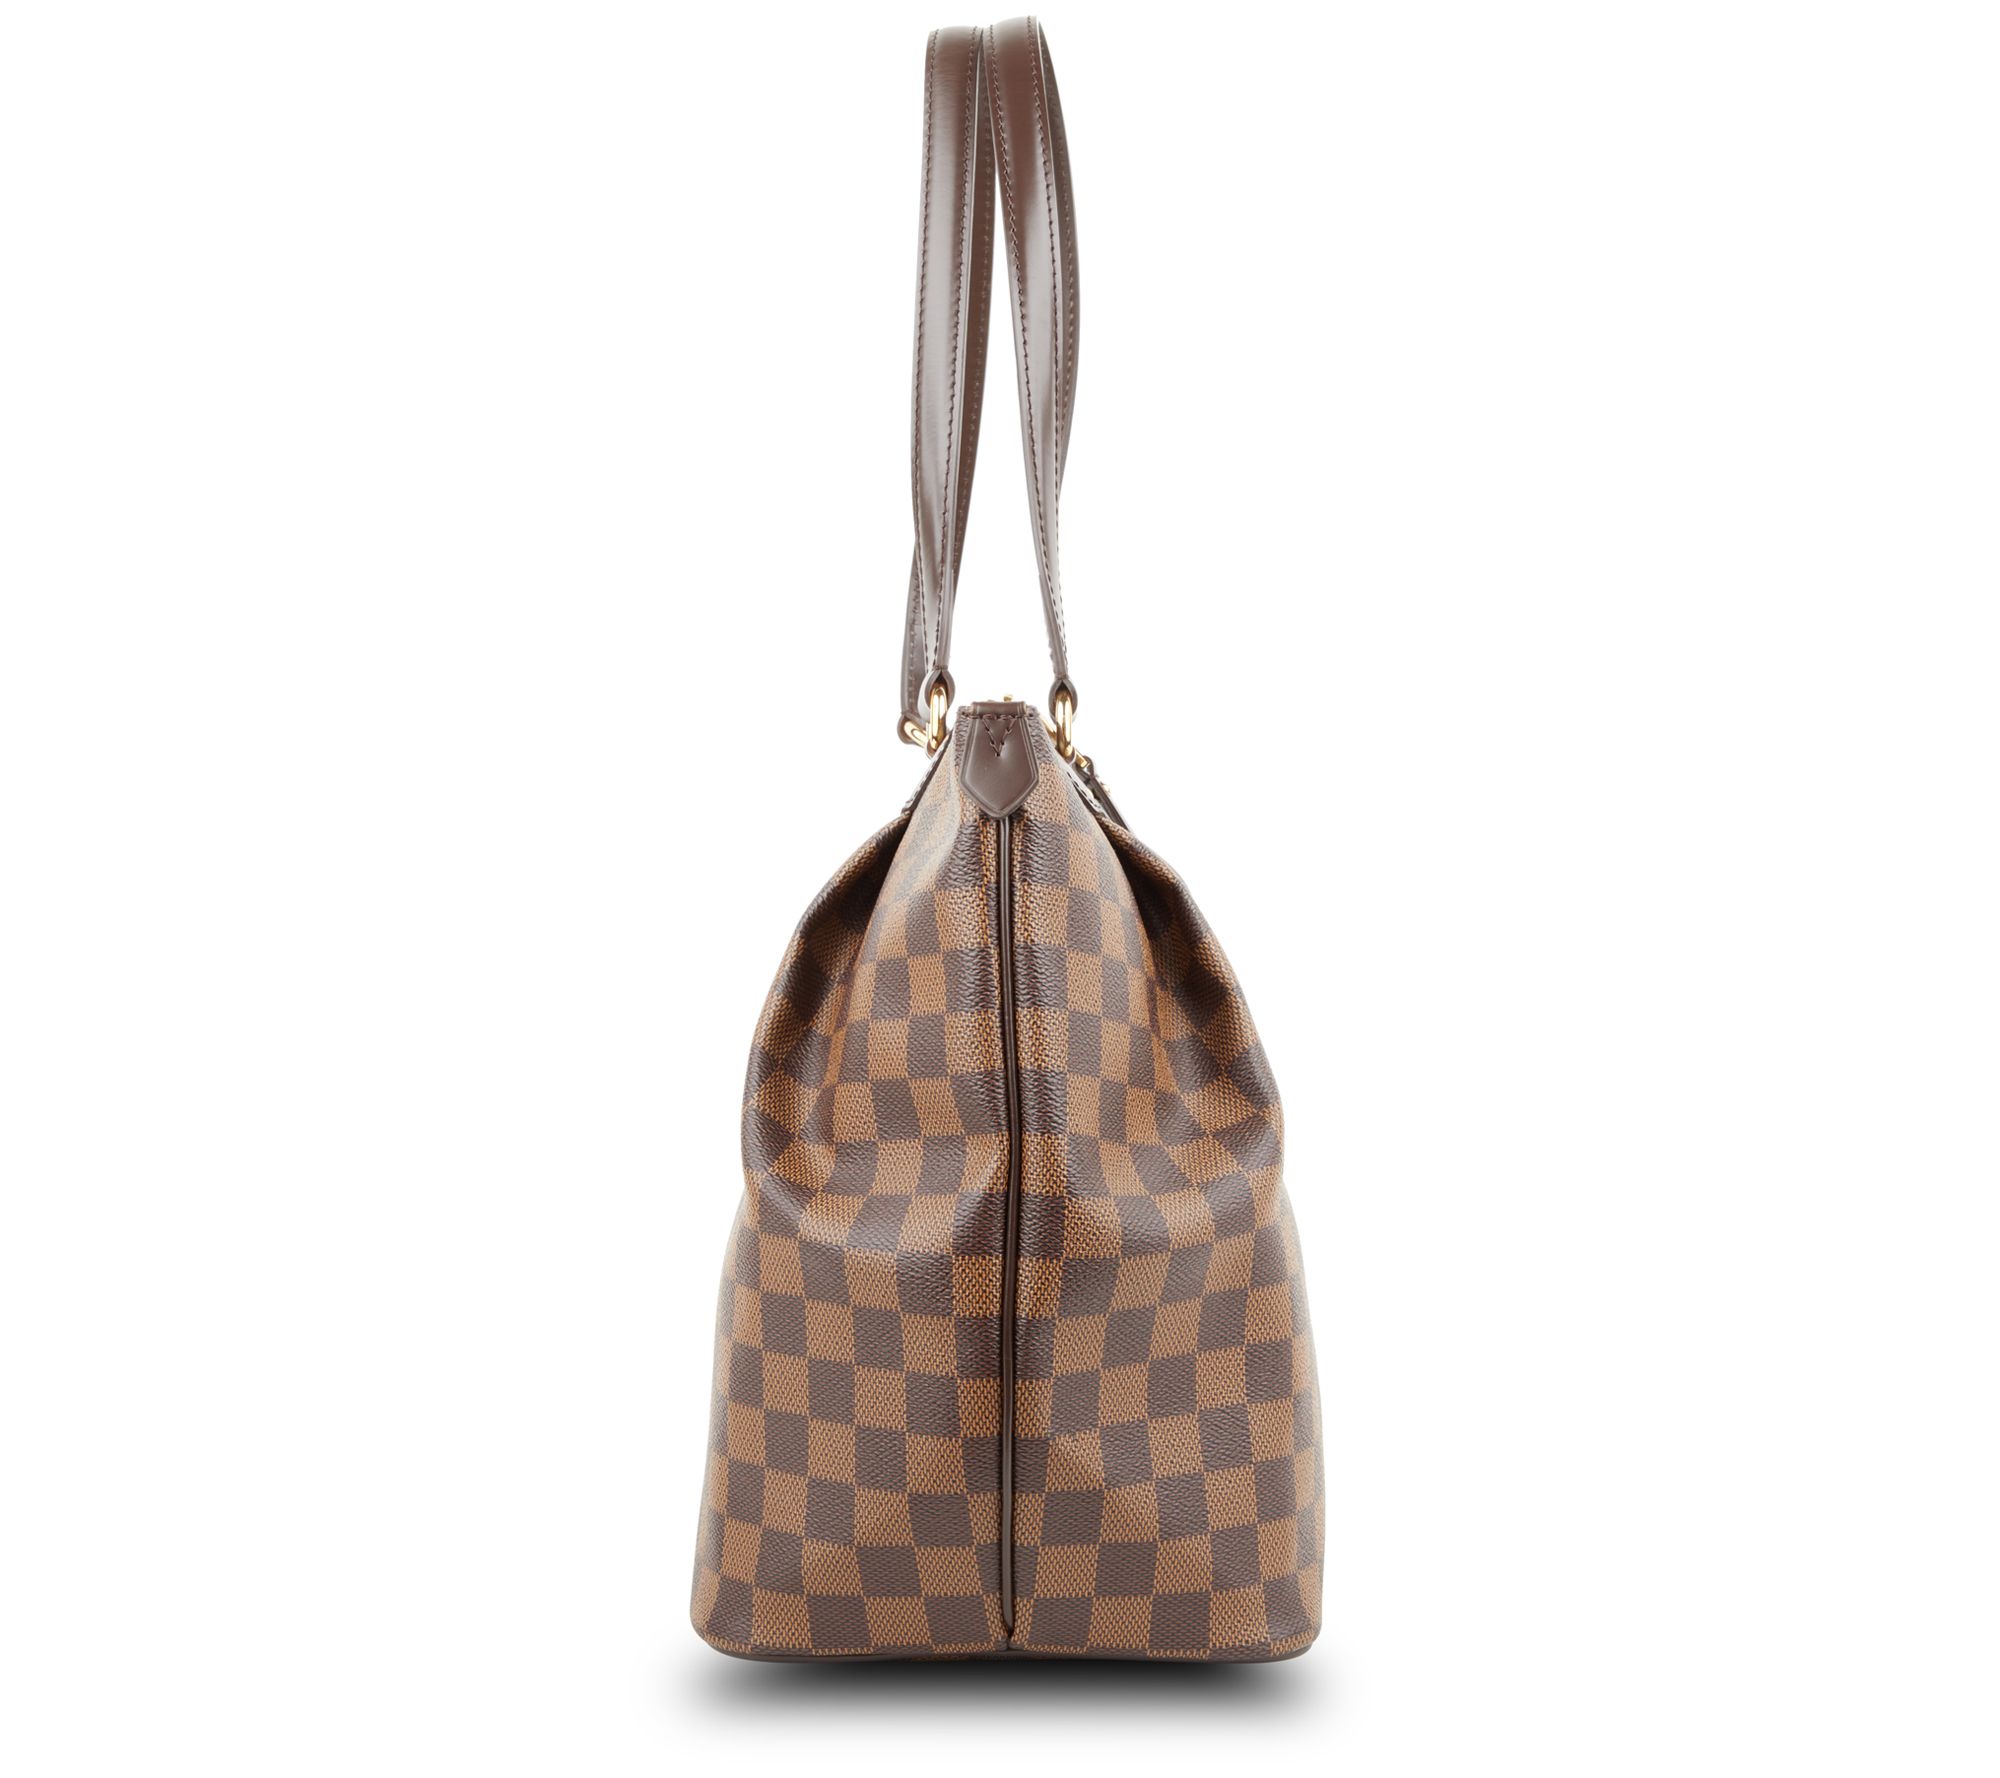 LOOK FOR LESS: Louis Vuitton Damier Bags (under $50!)